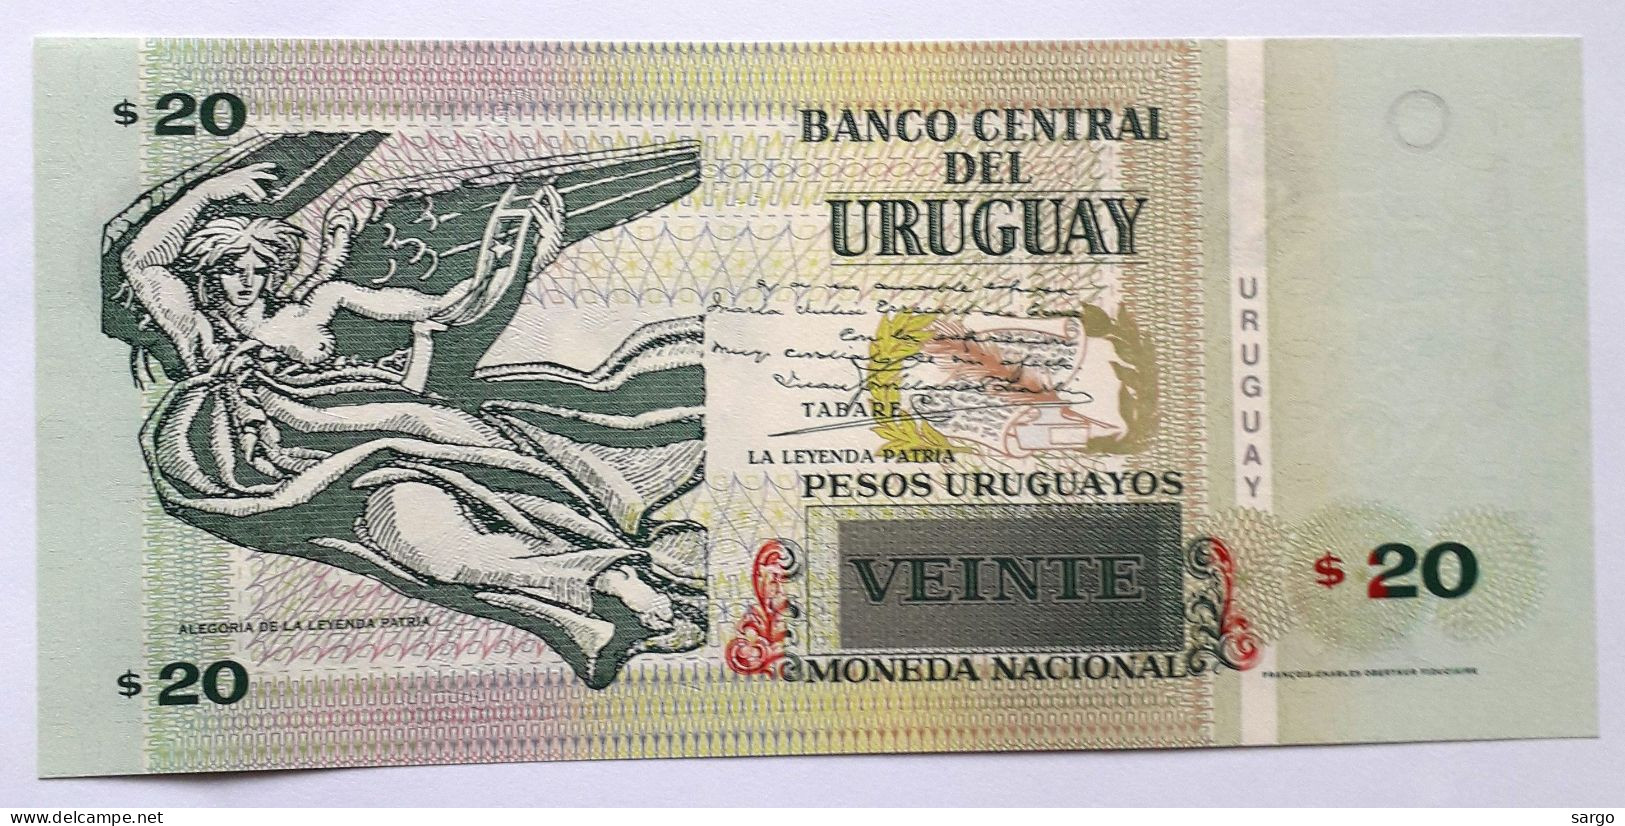 URUGUAY - 20 PESOS URUGUAYOS - P 86 A (2008)  - UNC - BANKNOTES - PAPER MONEY - CARTAMONETA - - Turkménistan